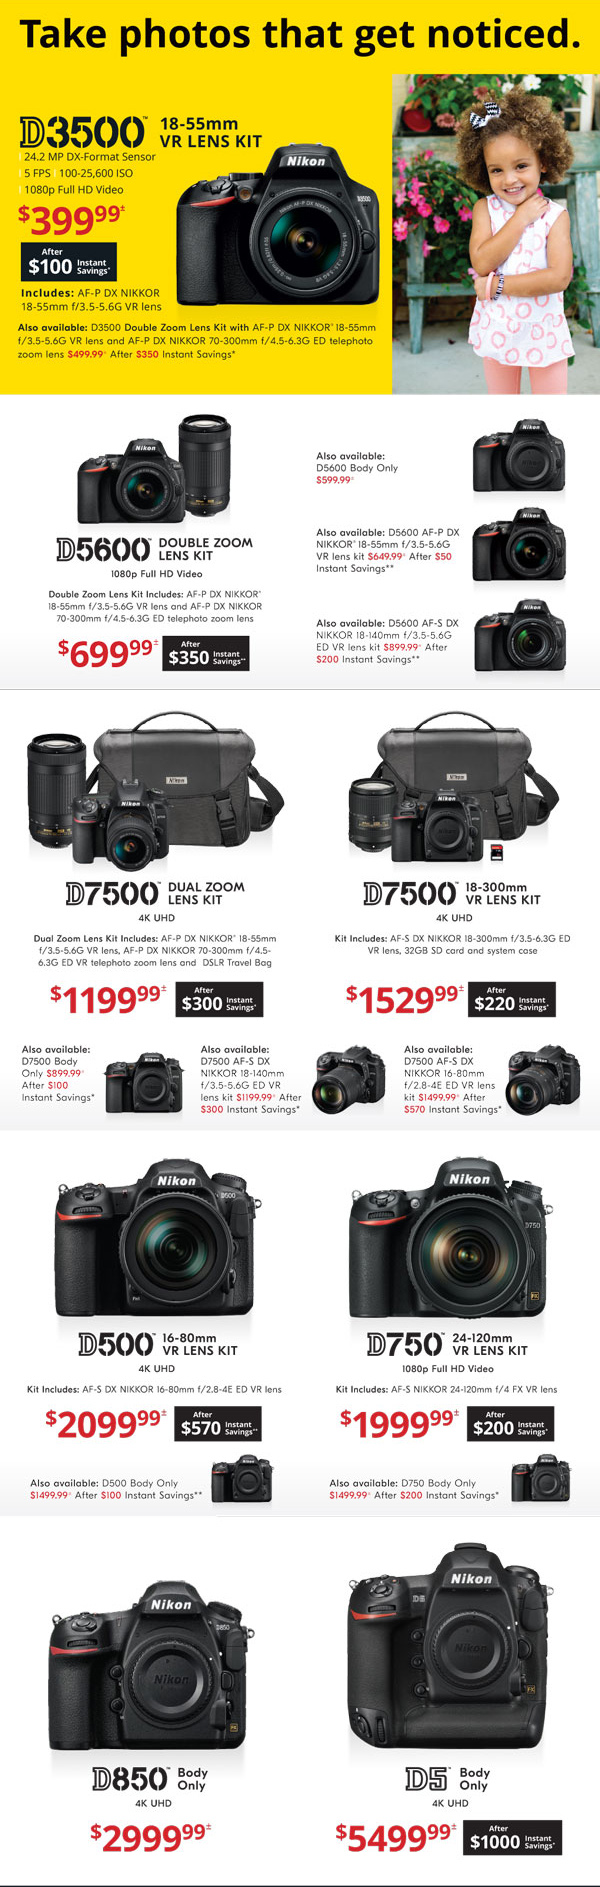 Take photos that get noticed. Nikon savings April 20th - 26th 2020